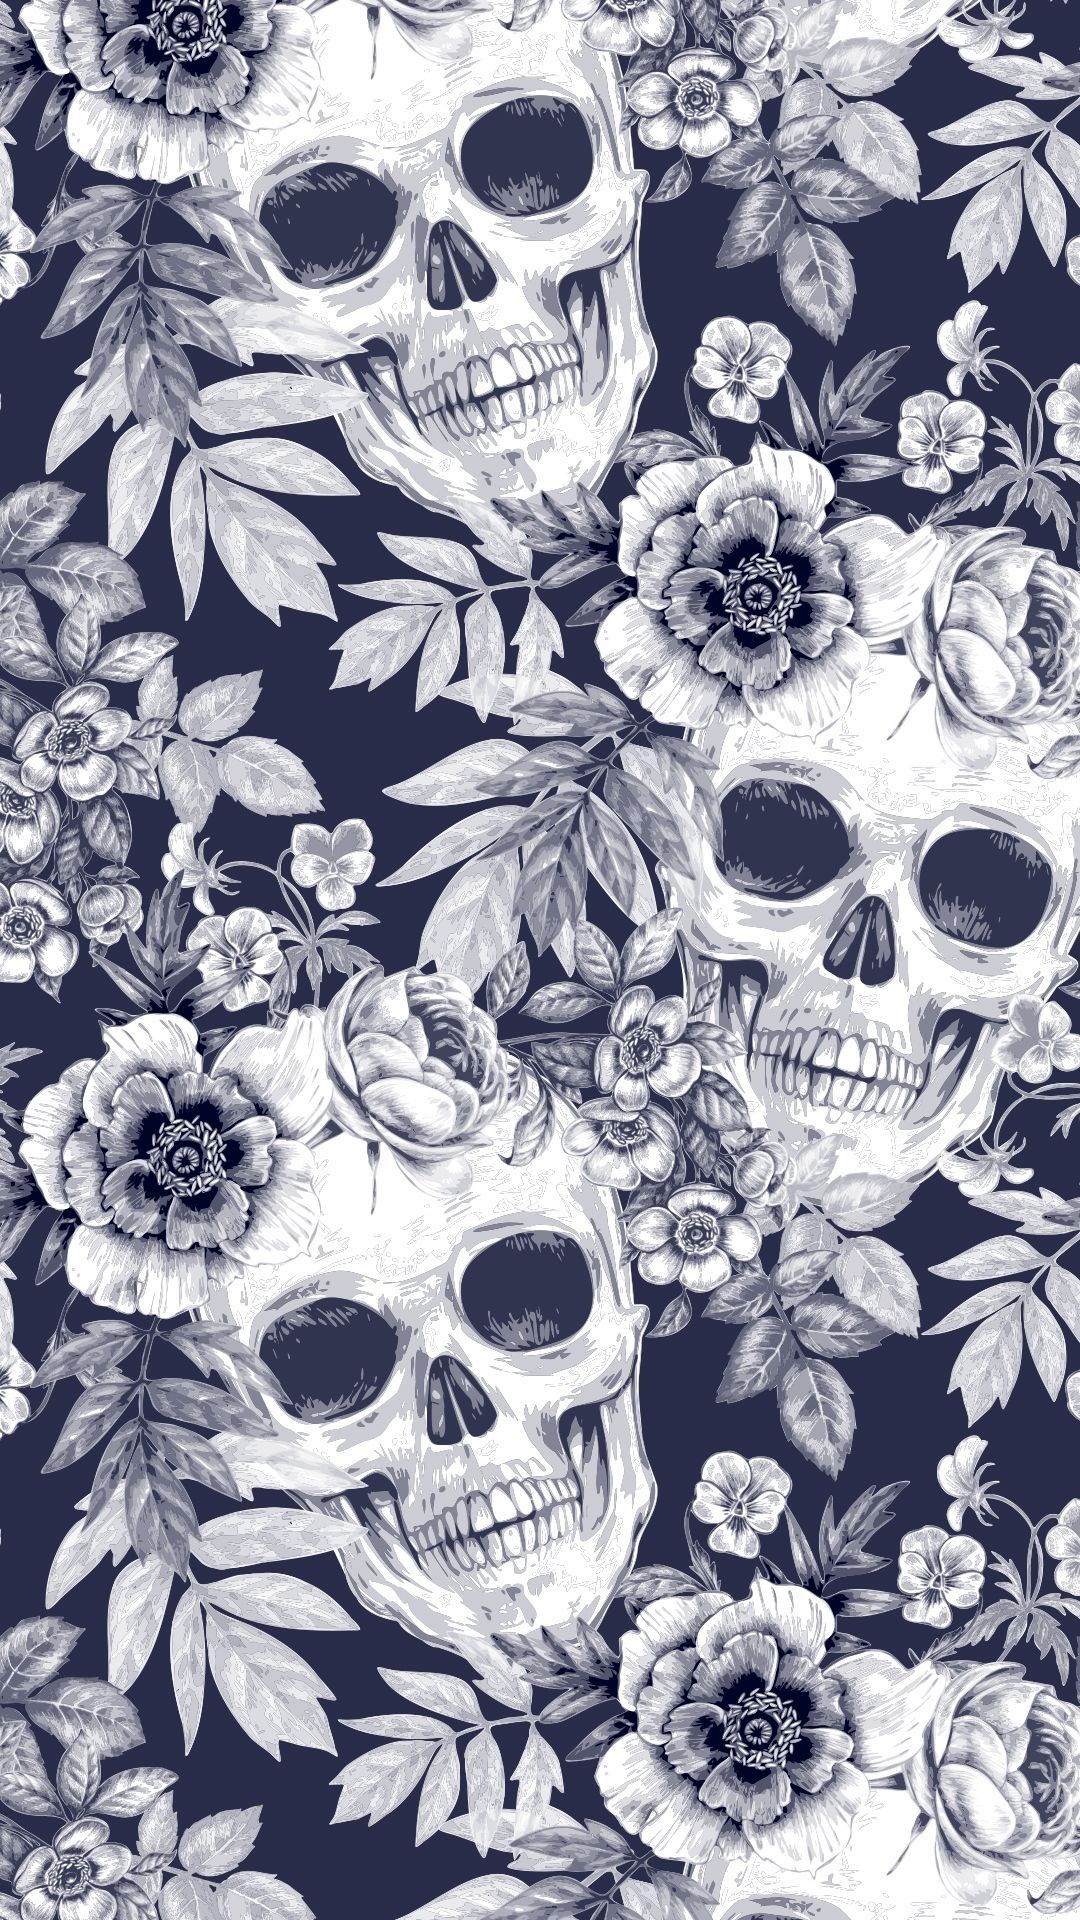 Gothic Skulls Wallpaper (best Gothic Skulls Wallpaper and image) on WallpaperChat